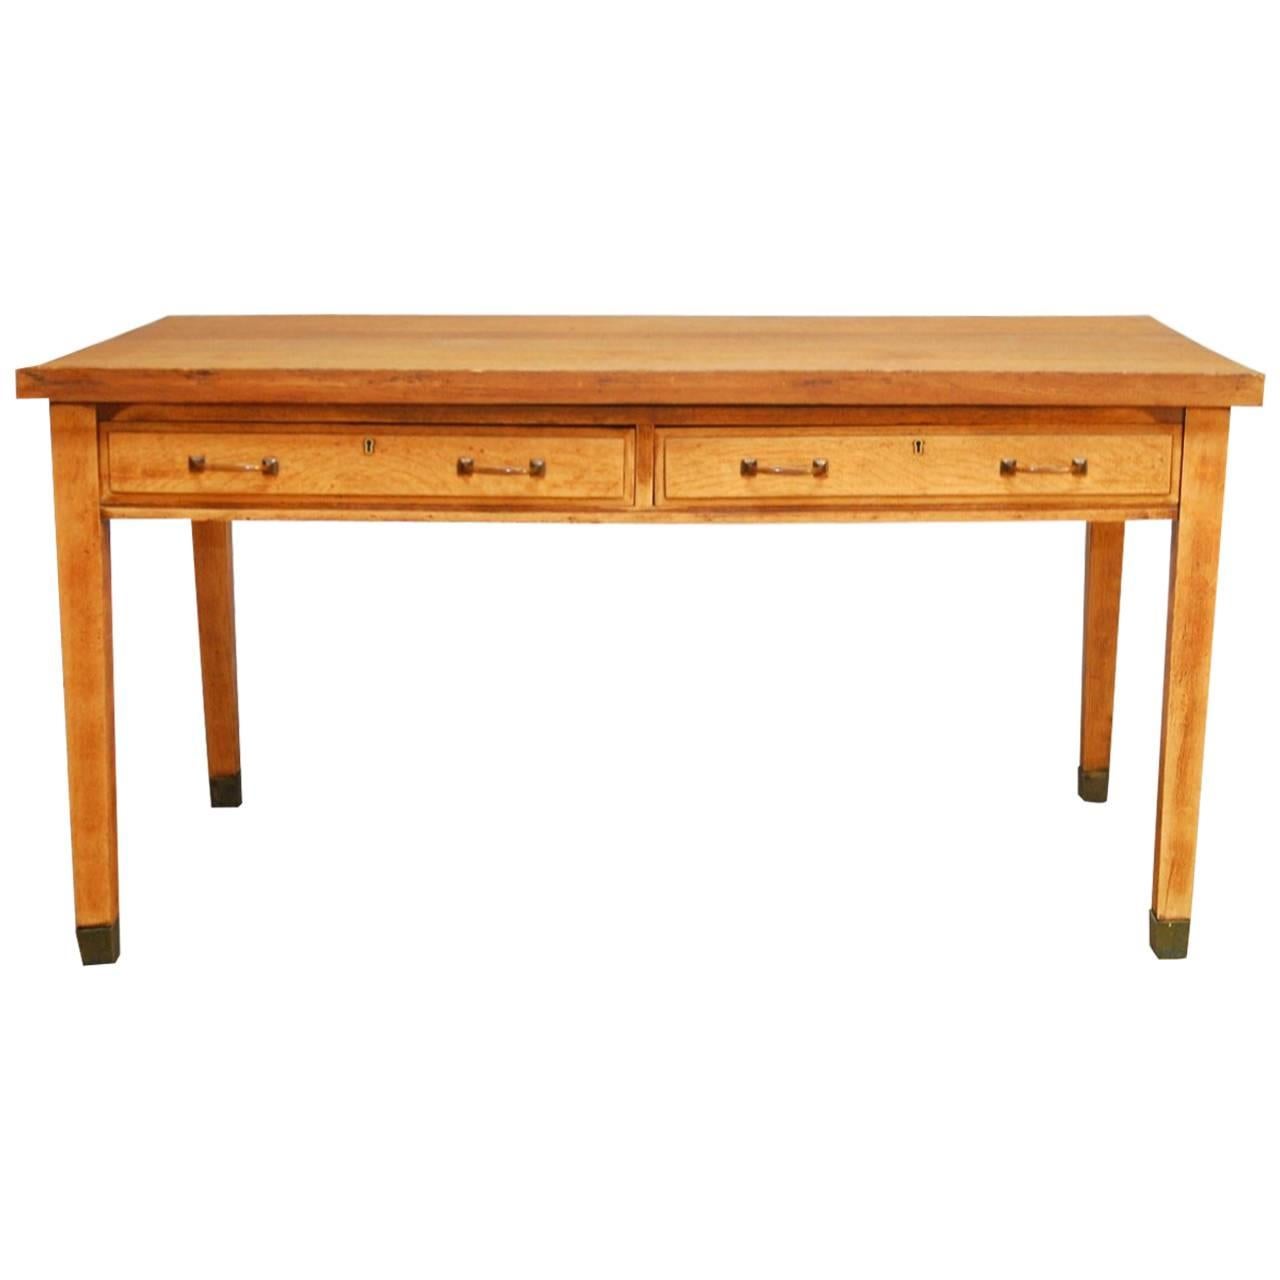 Quartersawn Oak Stickley Style Library Table or Desk